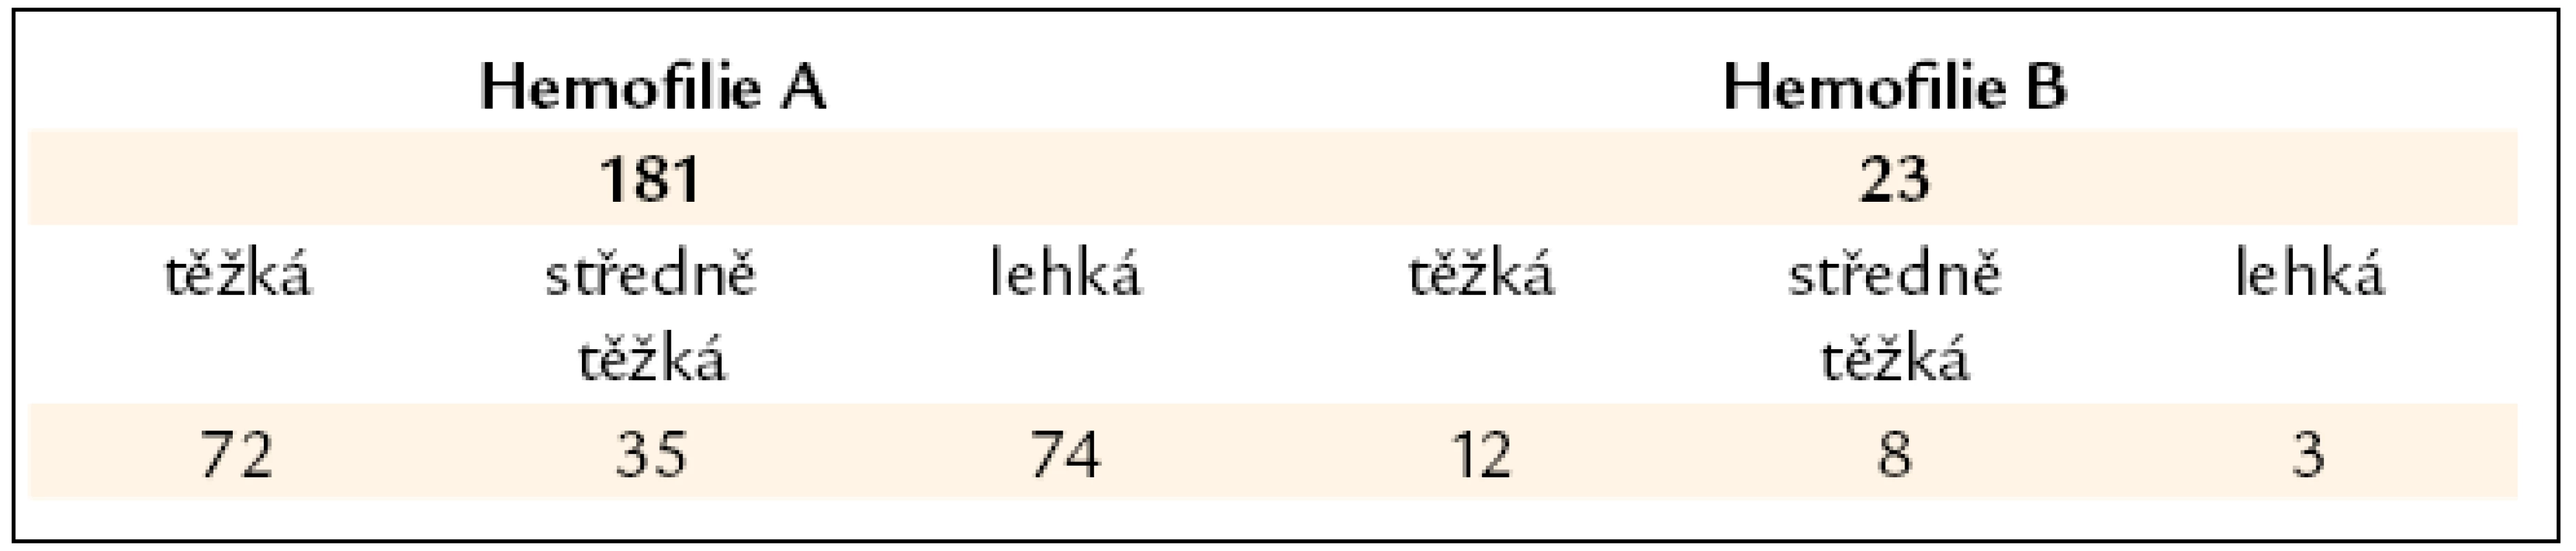 Počet hemofiliků A a B dispenzarizovaných v CTH ÚHKT.